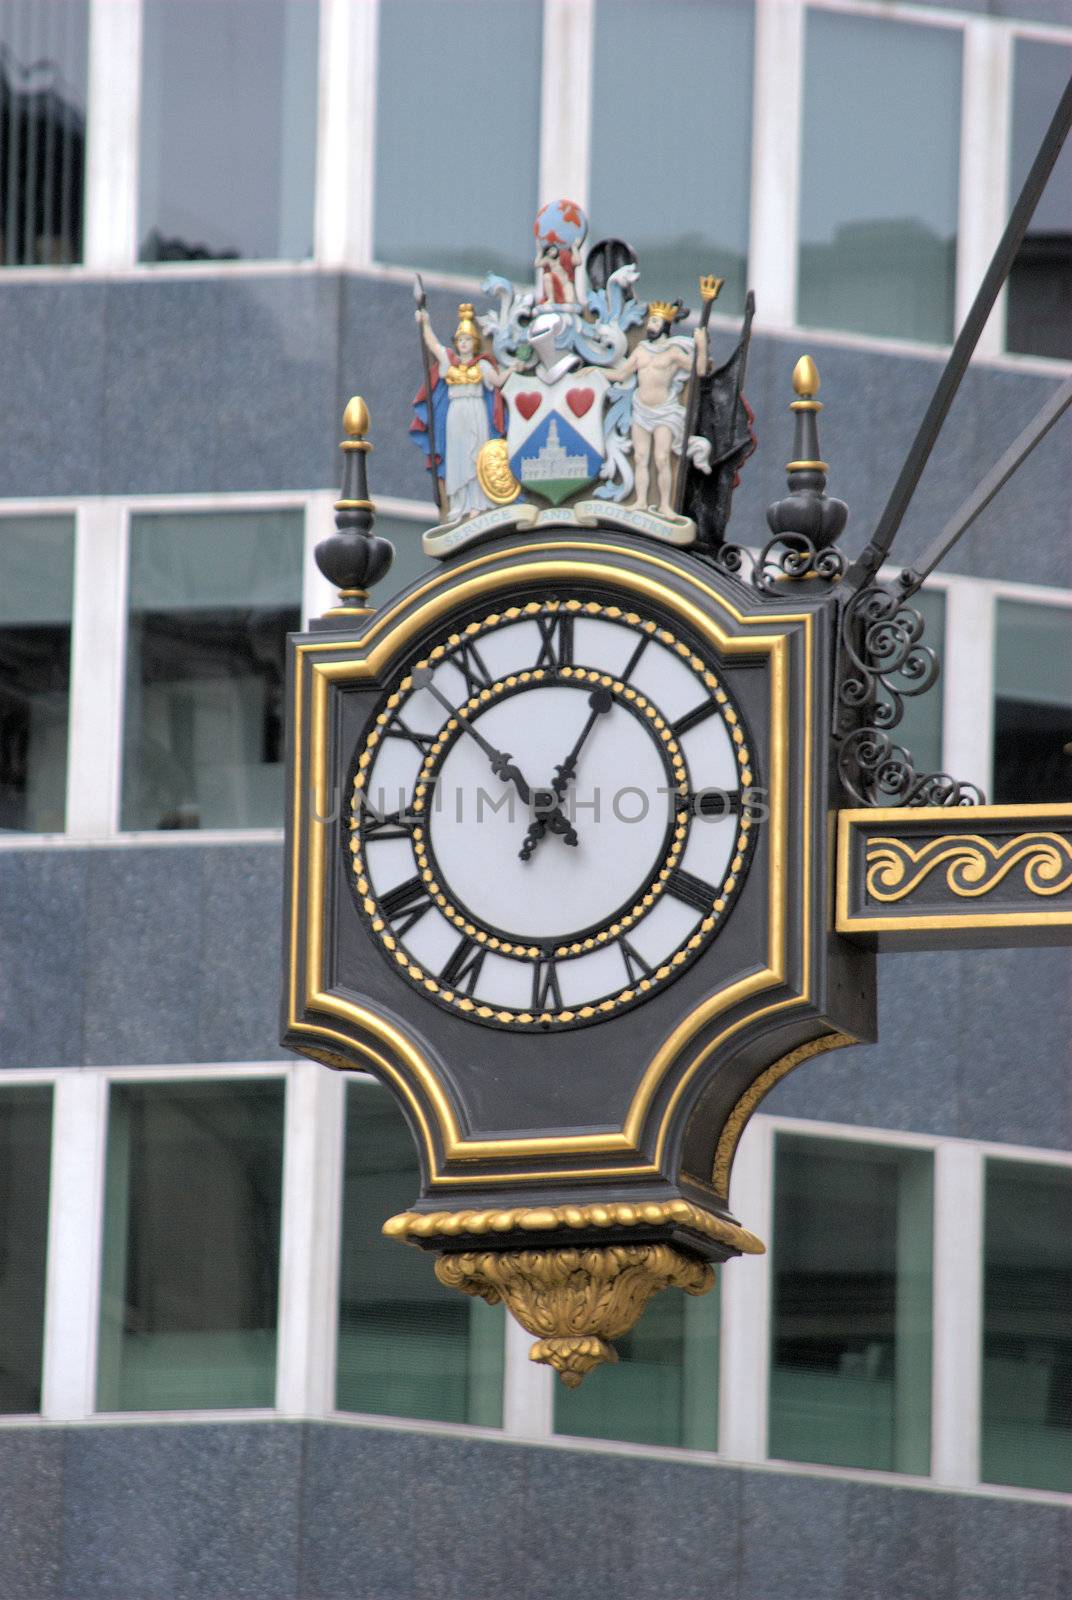 City clock by pauws99